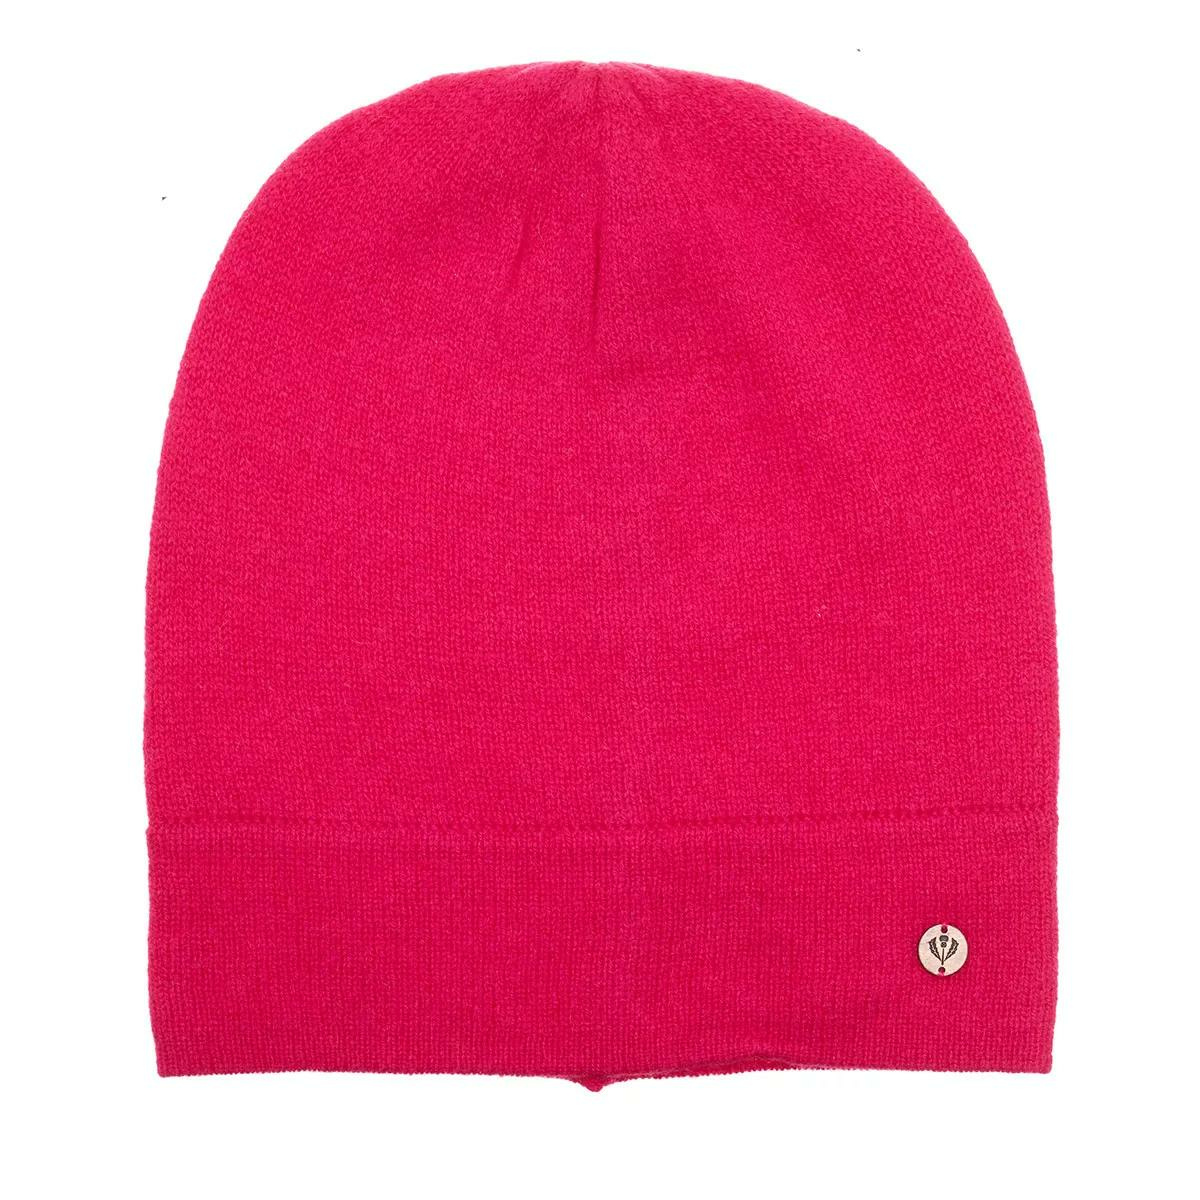 Fraas Cashmere Hat Pink Red Neu & Ovp 1351004